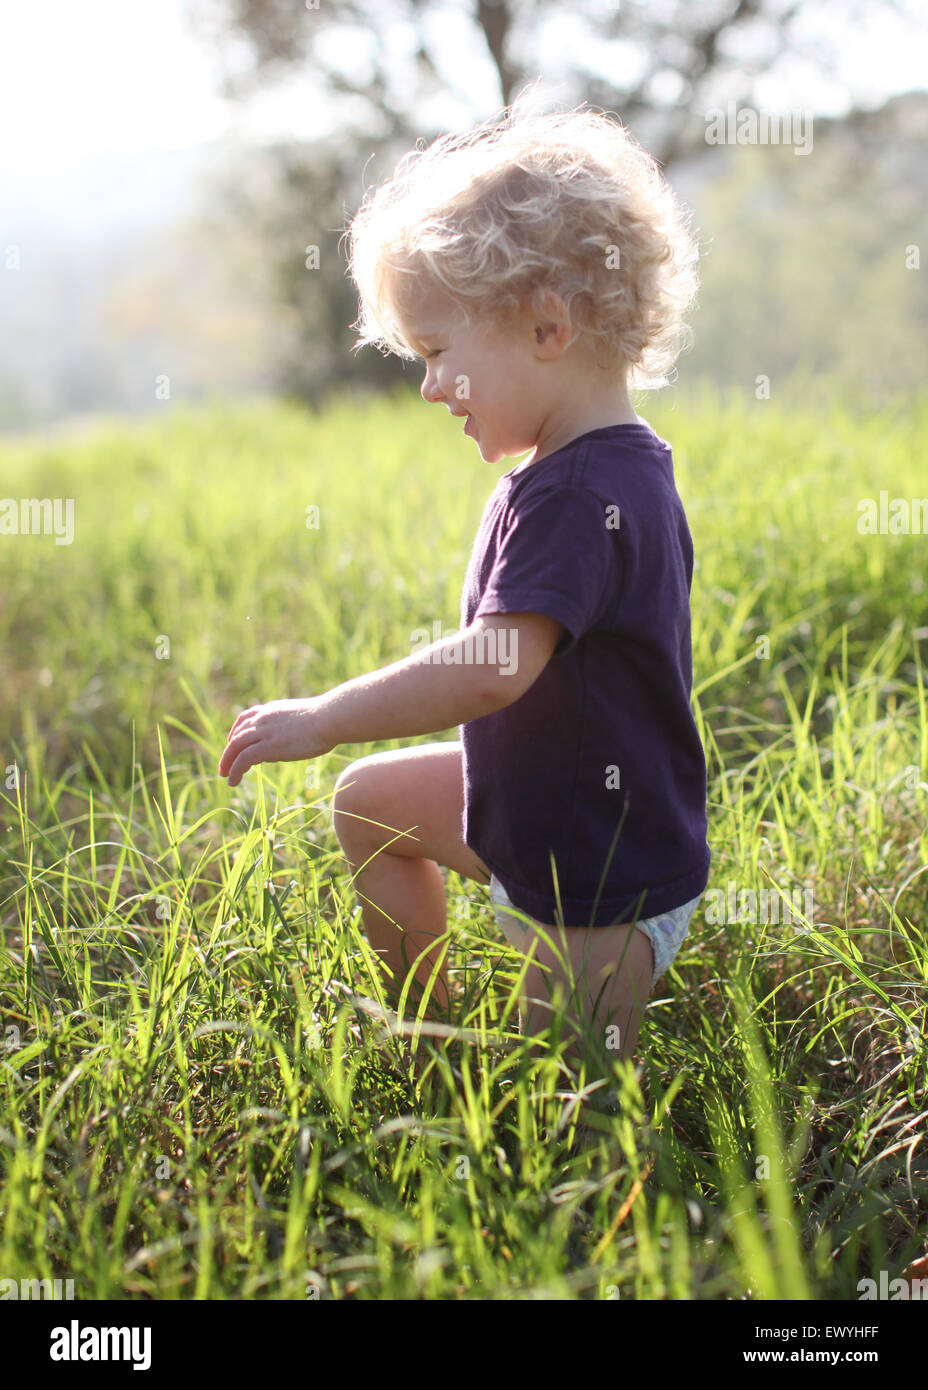 Boy kneeling in the grass Stock Photo